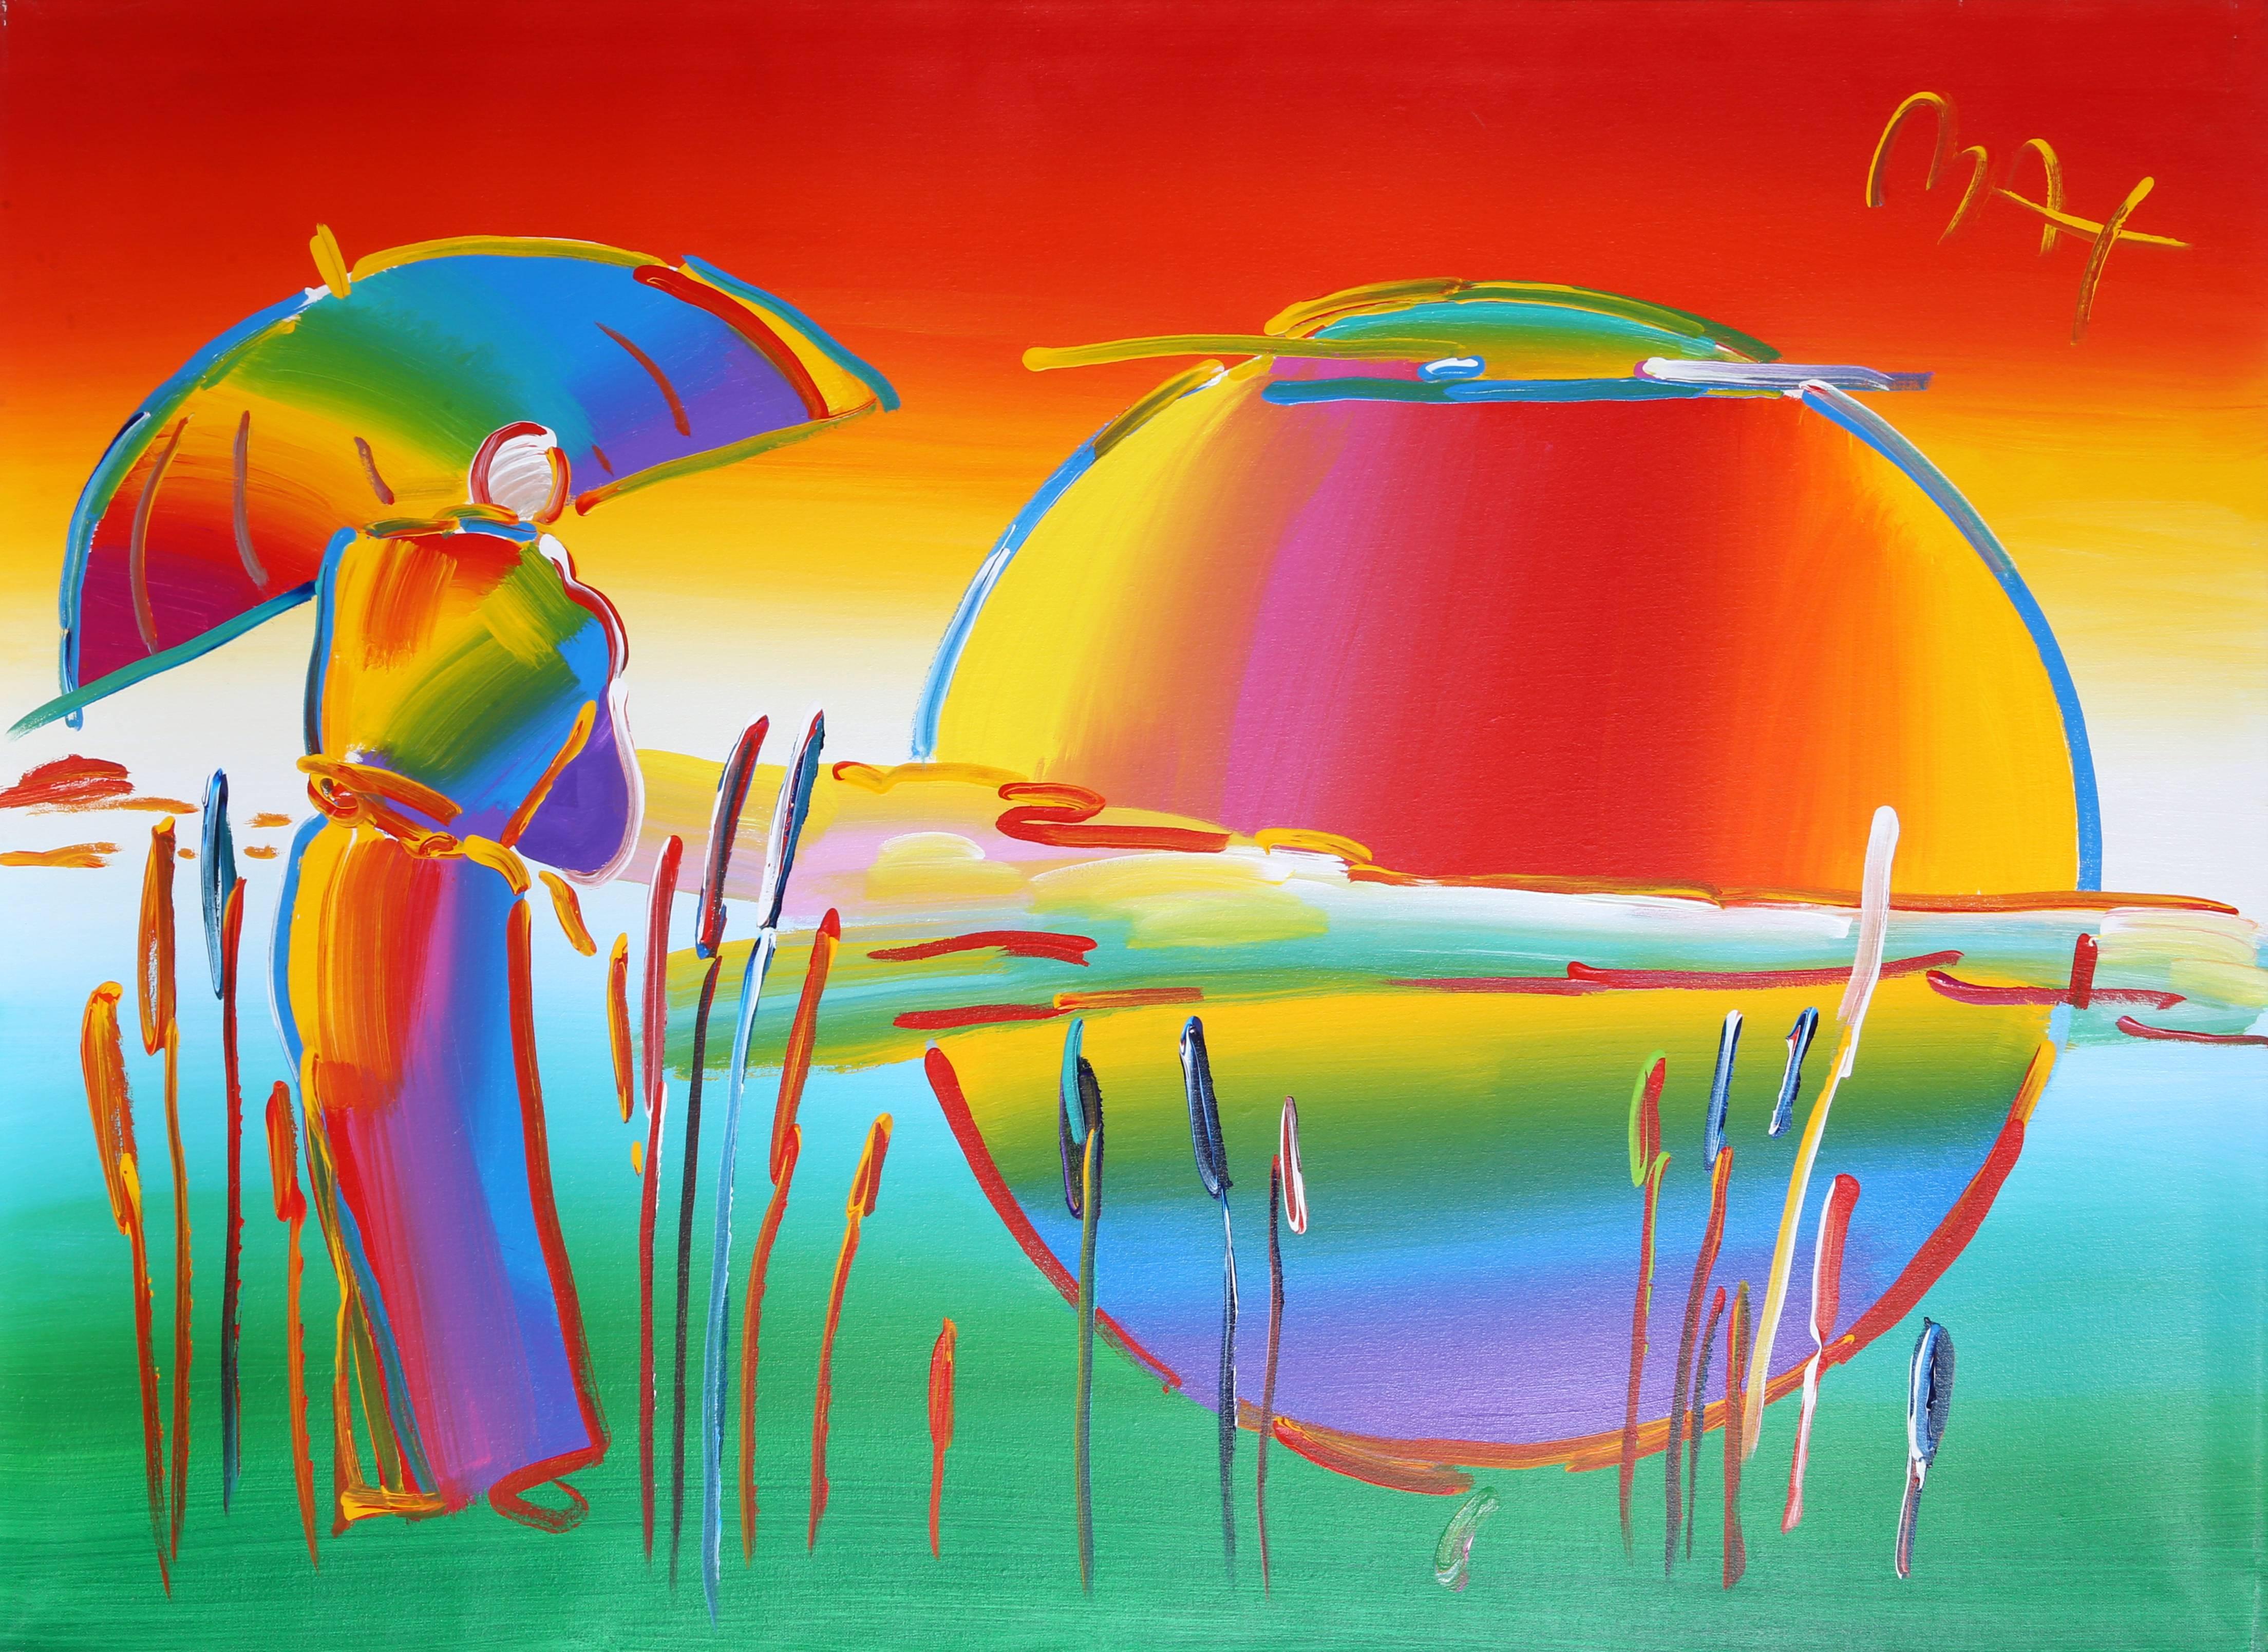 Peter Max Landscape Painting - Rainbow Umbrella Man in Reeds Version IV #7